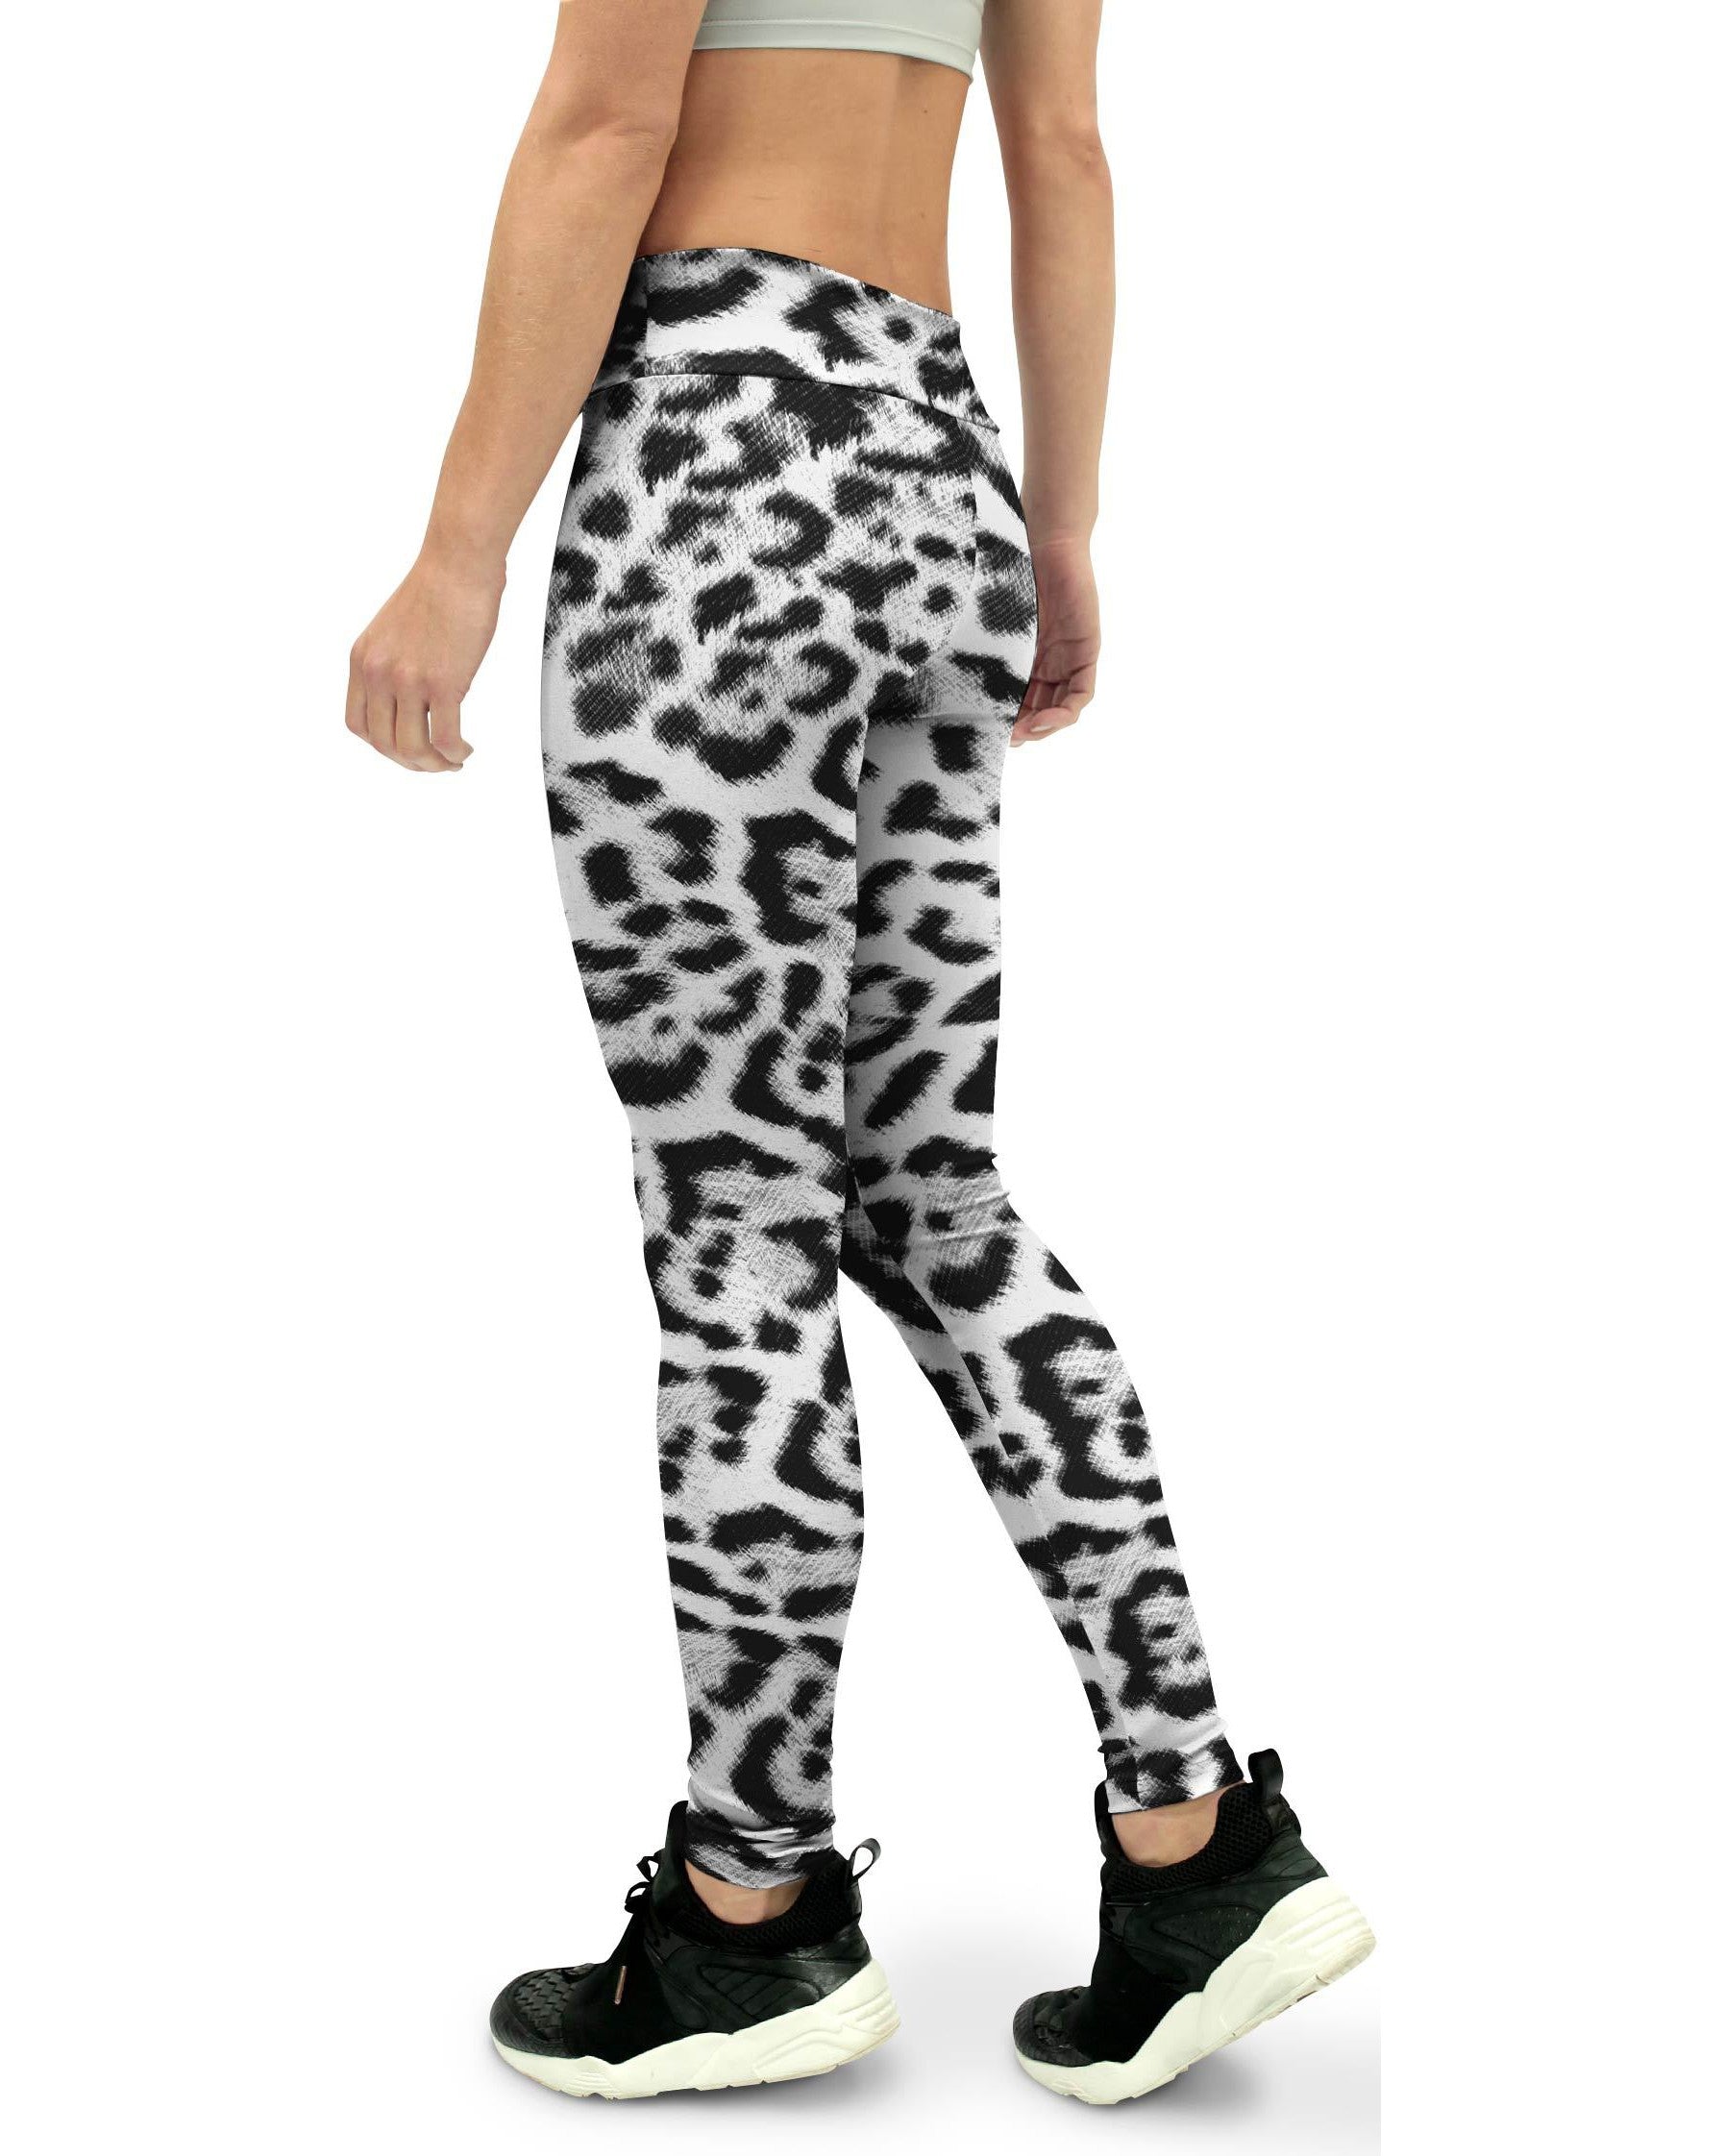 Snow Leopard Skin Yoga Pants